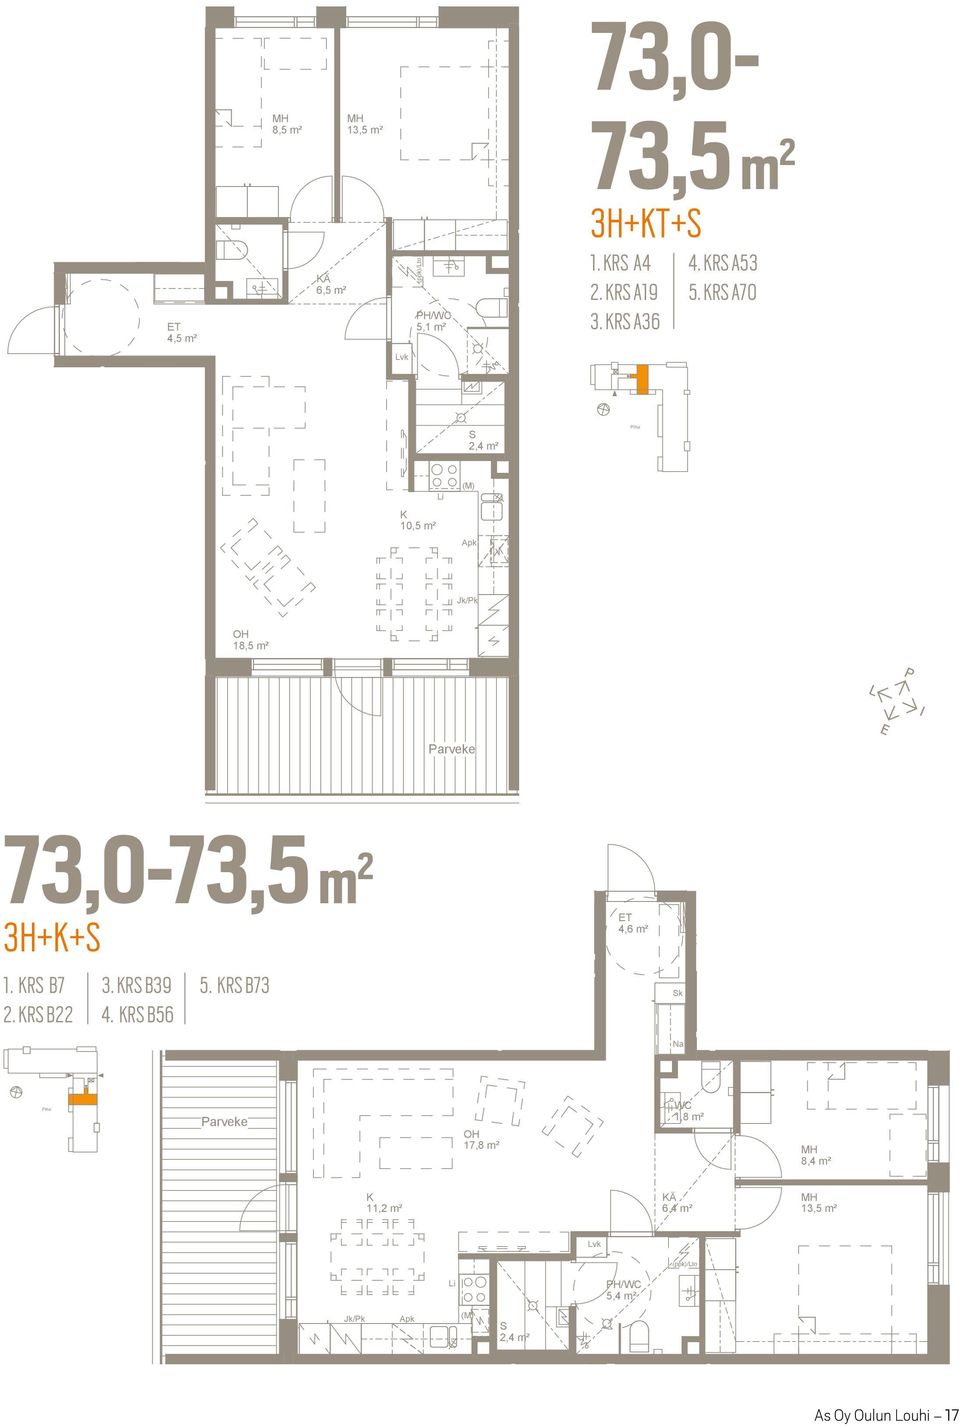 krs 73,0 m² Arkkitehtuuritoimisto Juha Paldanius Oy Vanhatie 73 FI-90310 Oulu tel. +38 8 31 120 toimisto@.fi www..fi 8, m² 13, m² 73,0-73, m 2 4, m² Ä 6, m²,1 m² 3H+T+ 1. R A4 2. R A19 3. R A36 4.